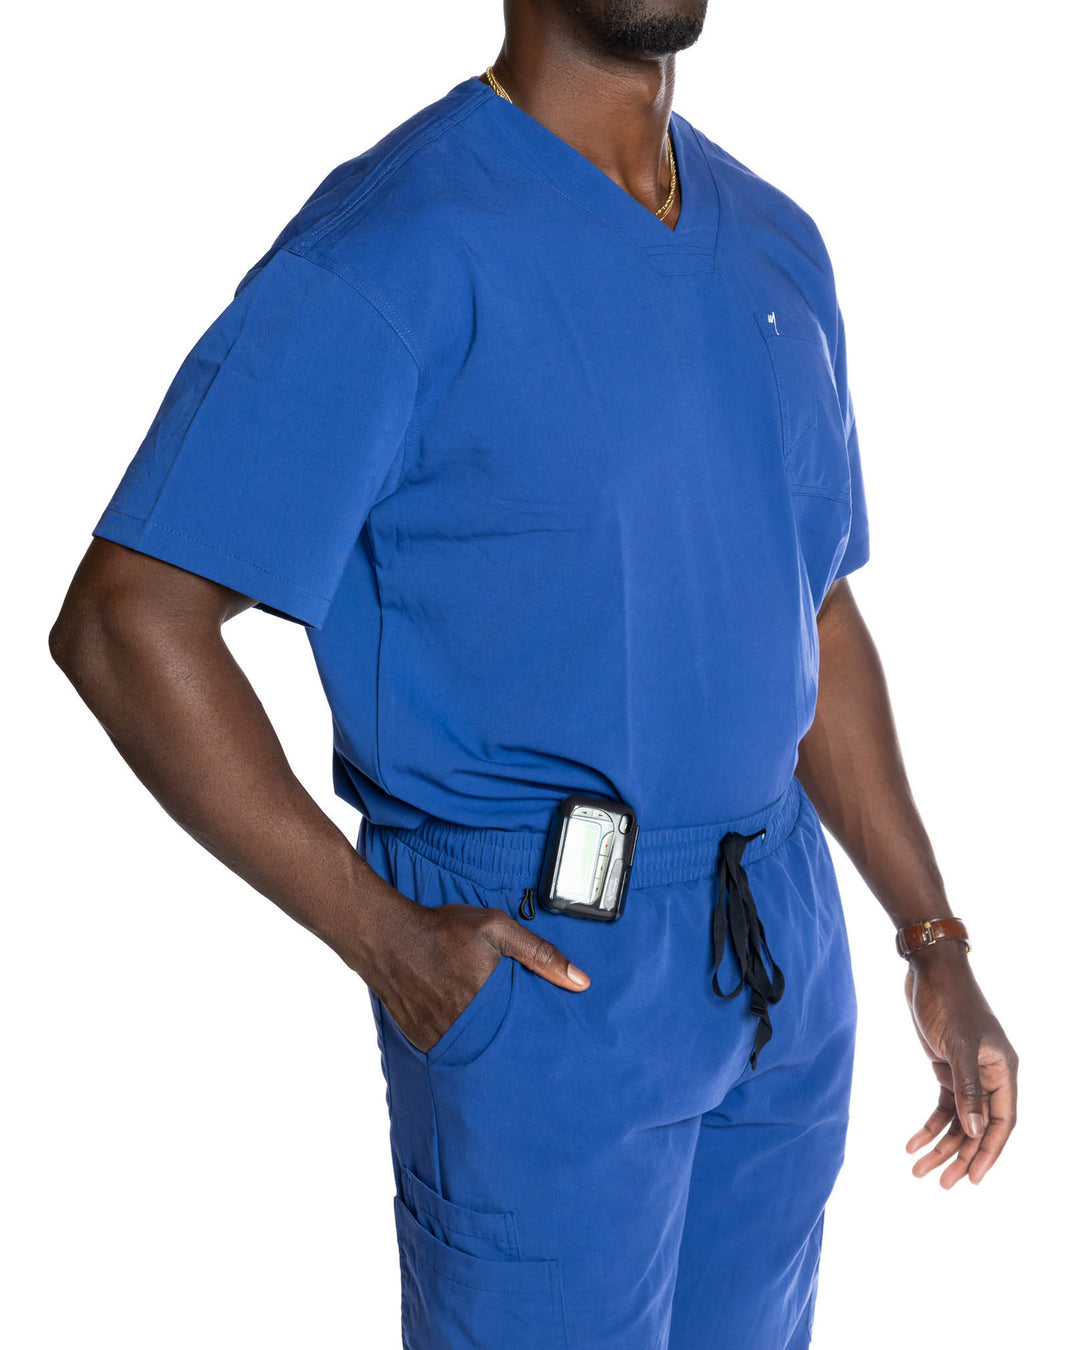 men's Navy Blue Scrub Top - Jogger Scrubs by Millennials In Medicine (Mim Scrubs)